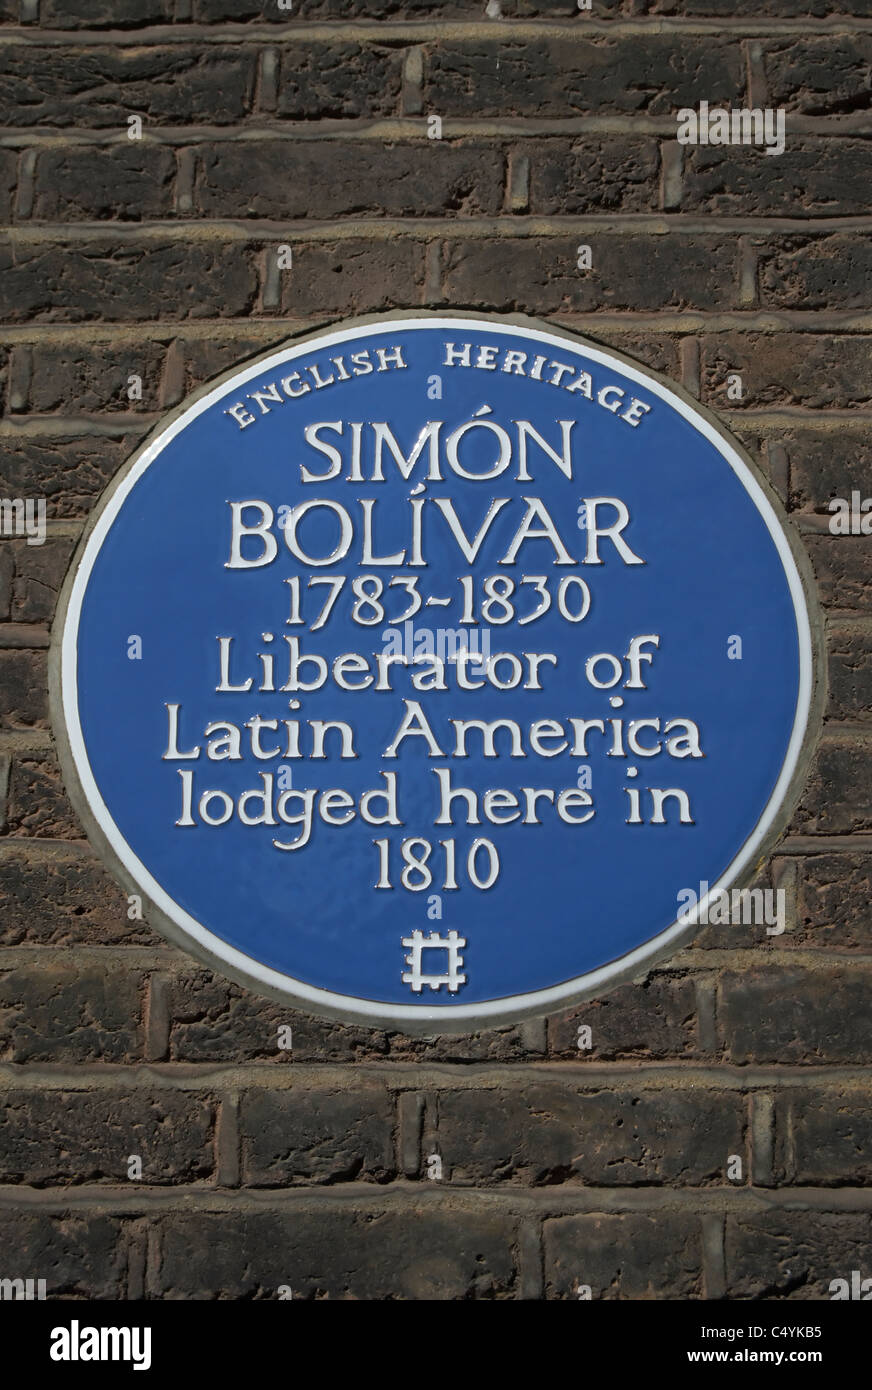 english heritage blue plaque marking a lodging of simon bolivar, marylebone, london, england Stock Photo